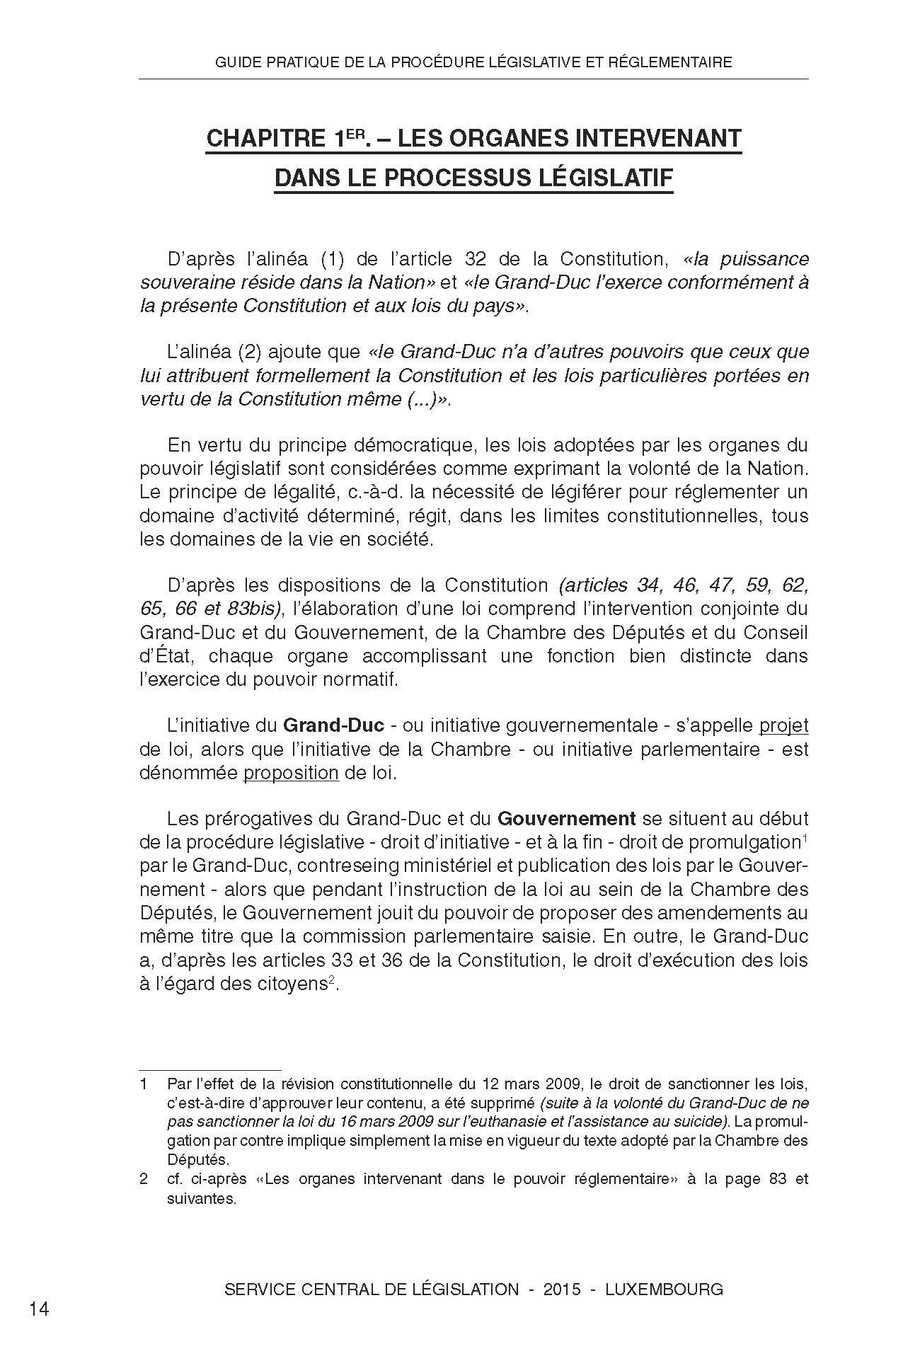 Pages from recueil-procedure_legislative-20150301-fr-pdf_Page_14.jpg